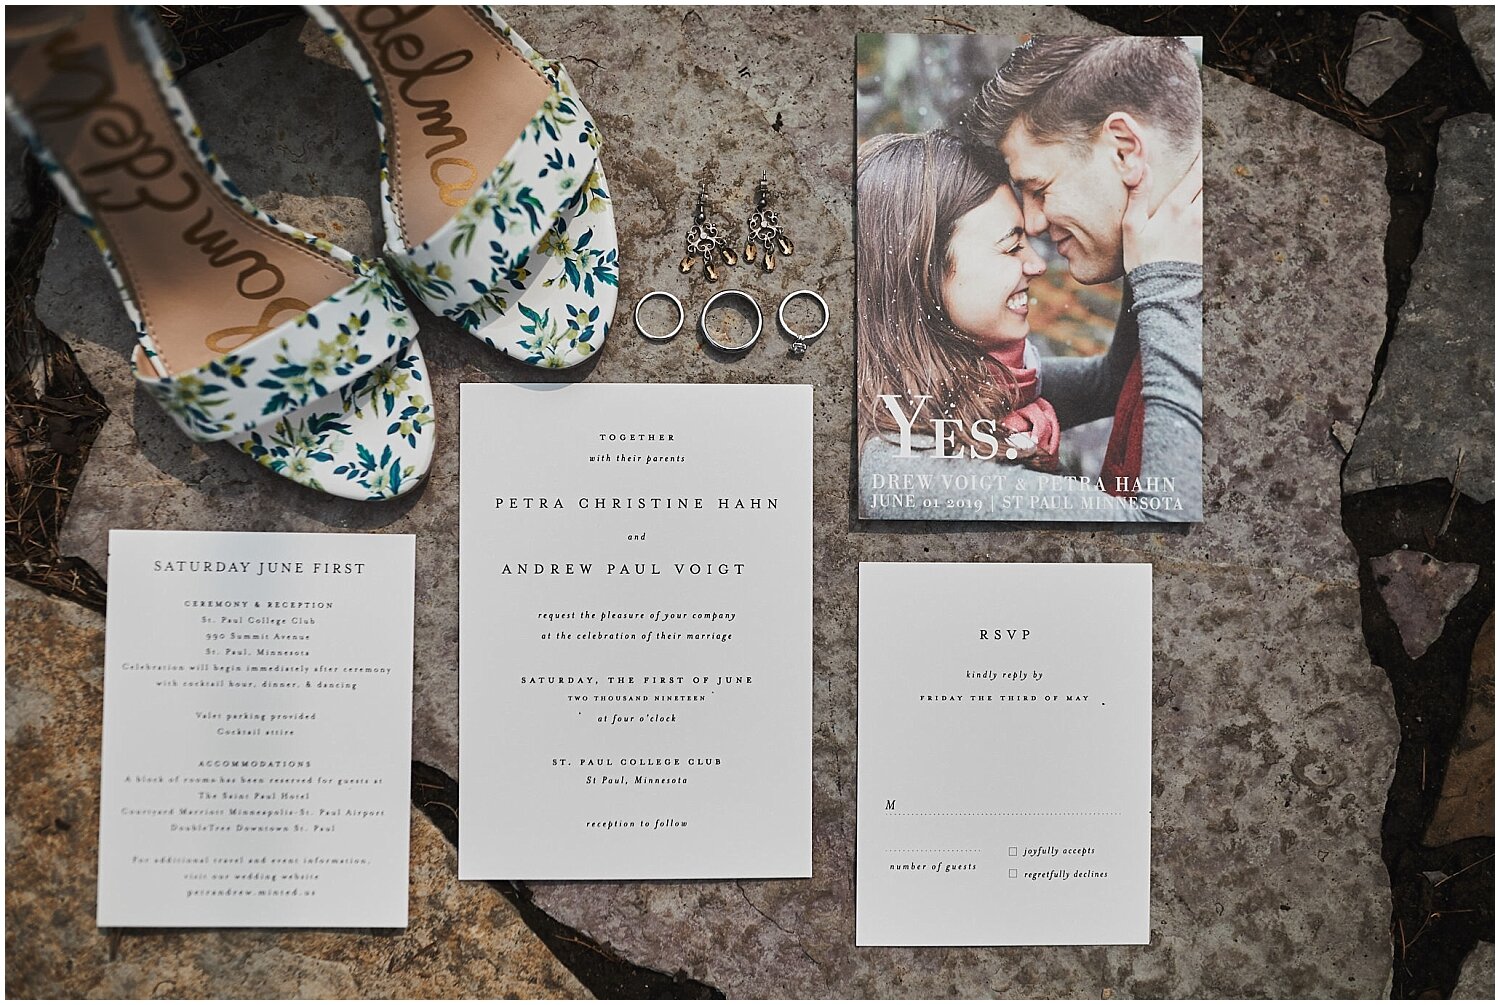  Wedding invitation and wedding shoes 